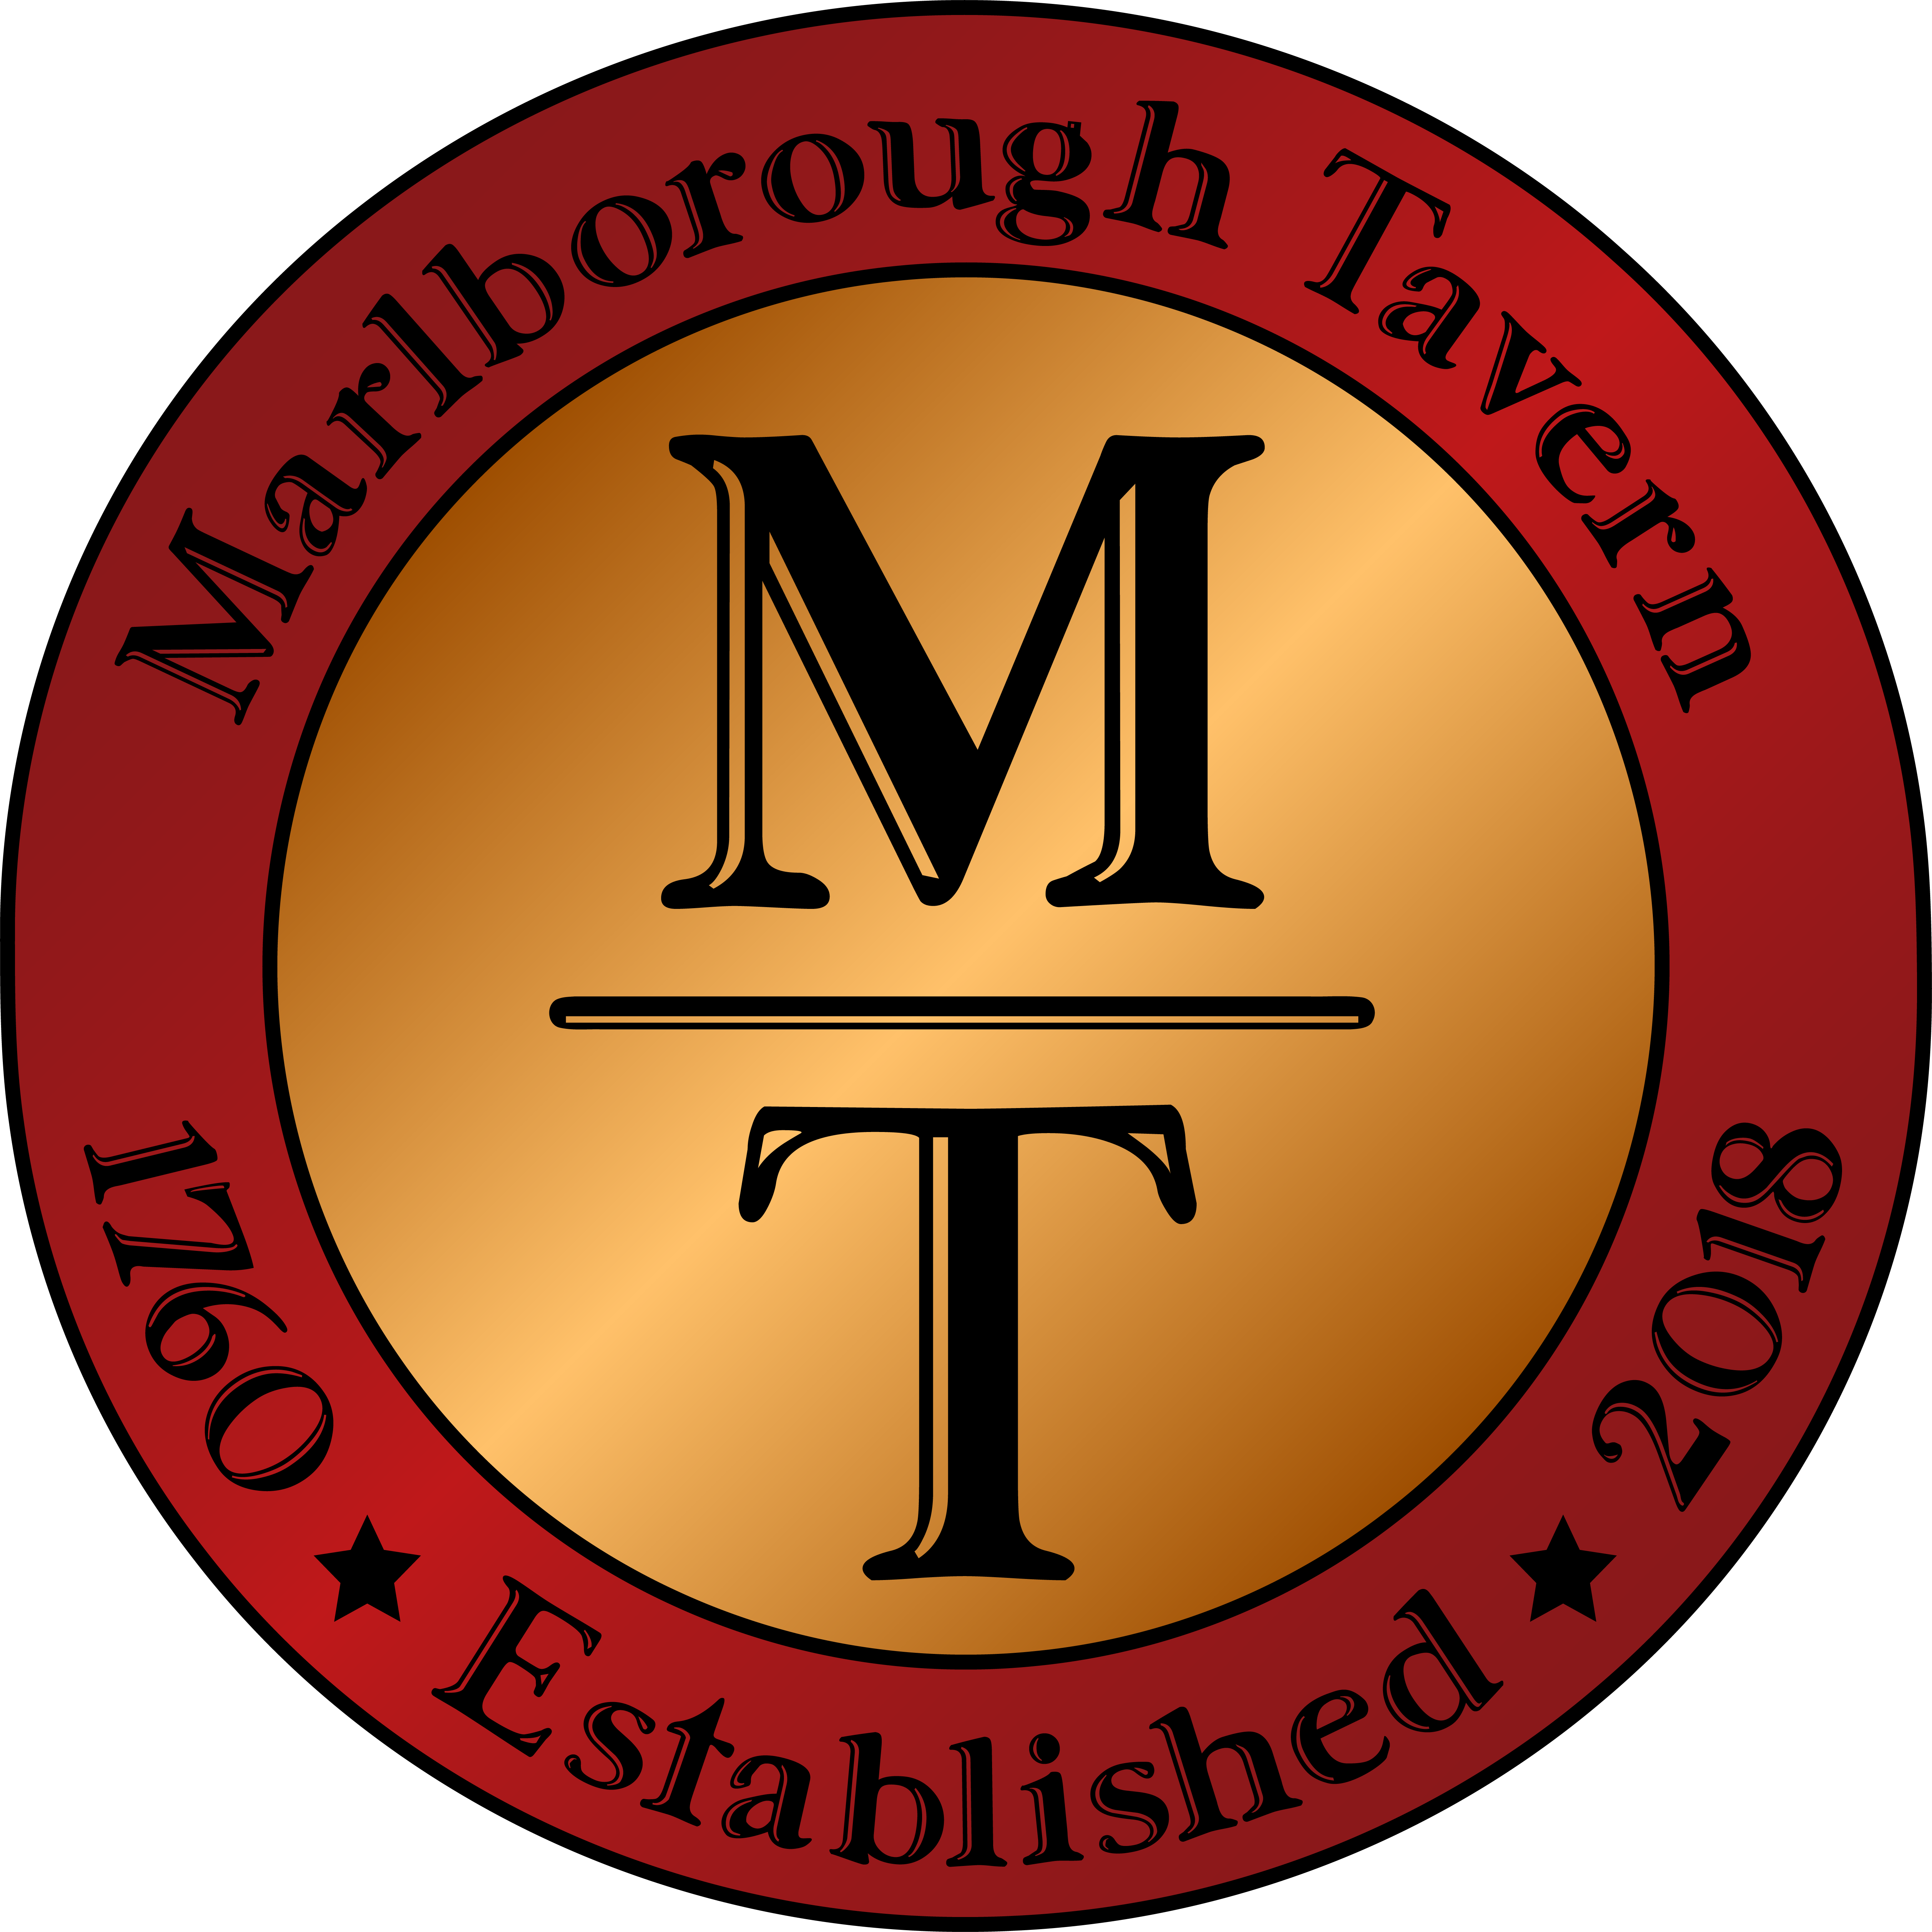 The Marlborough Tavern